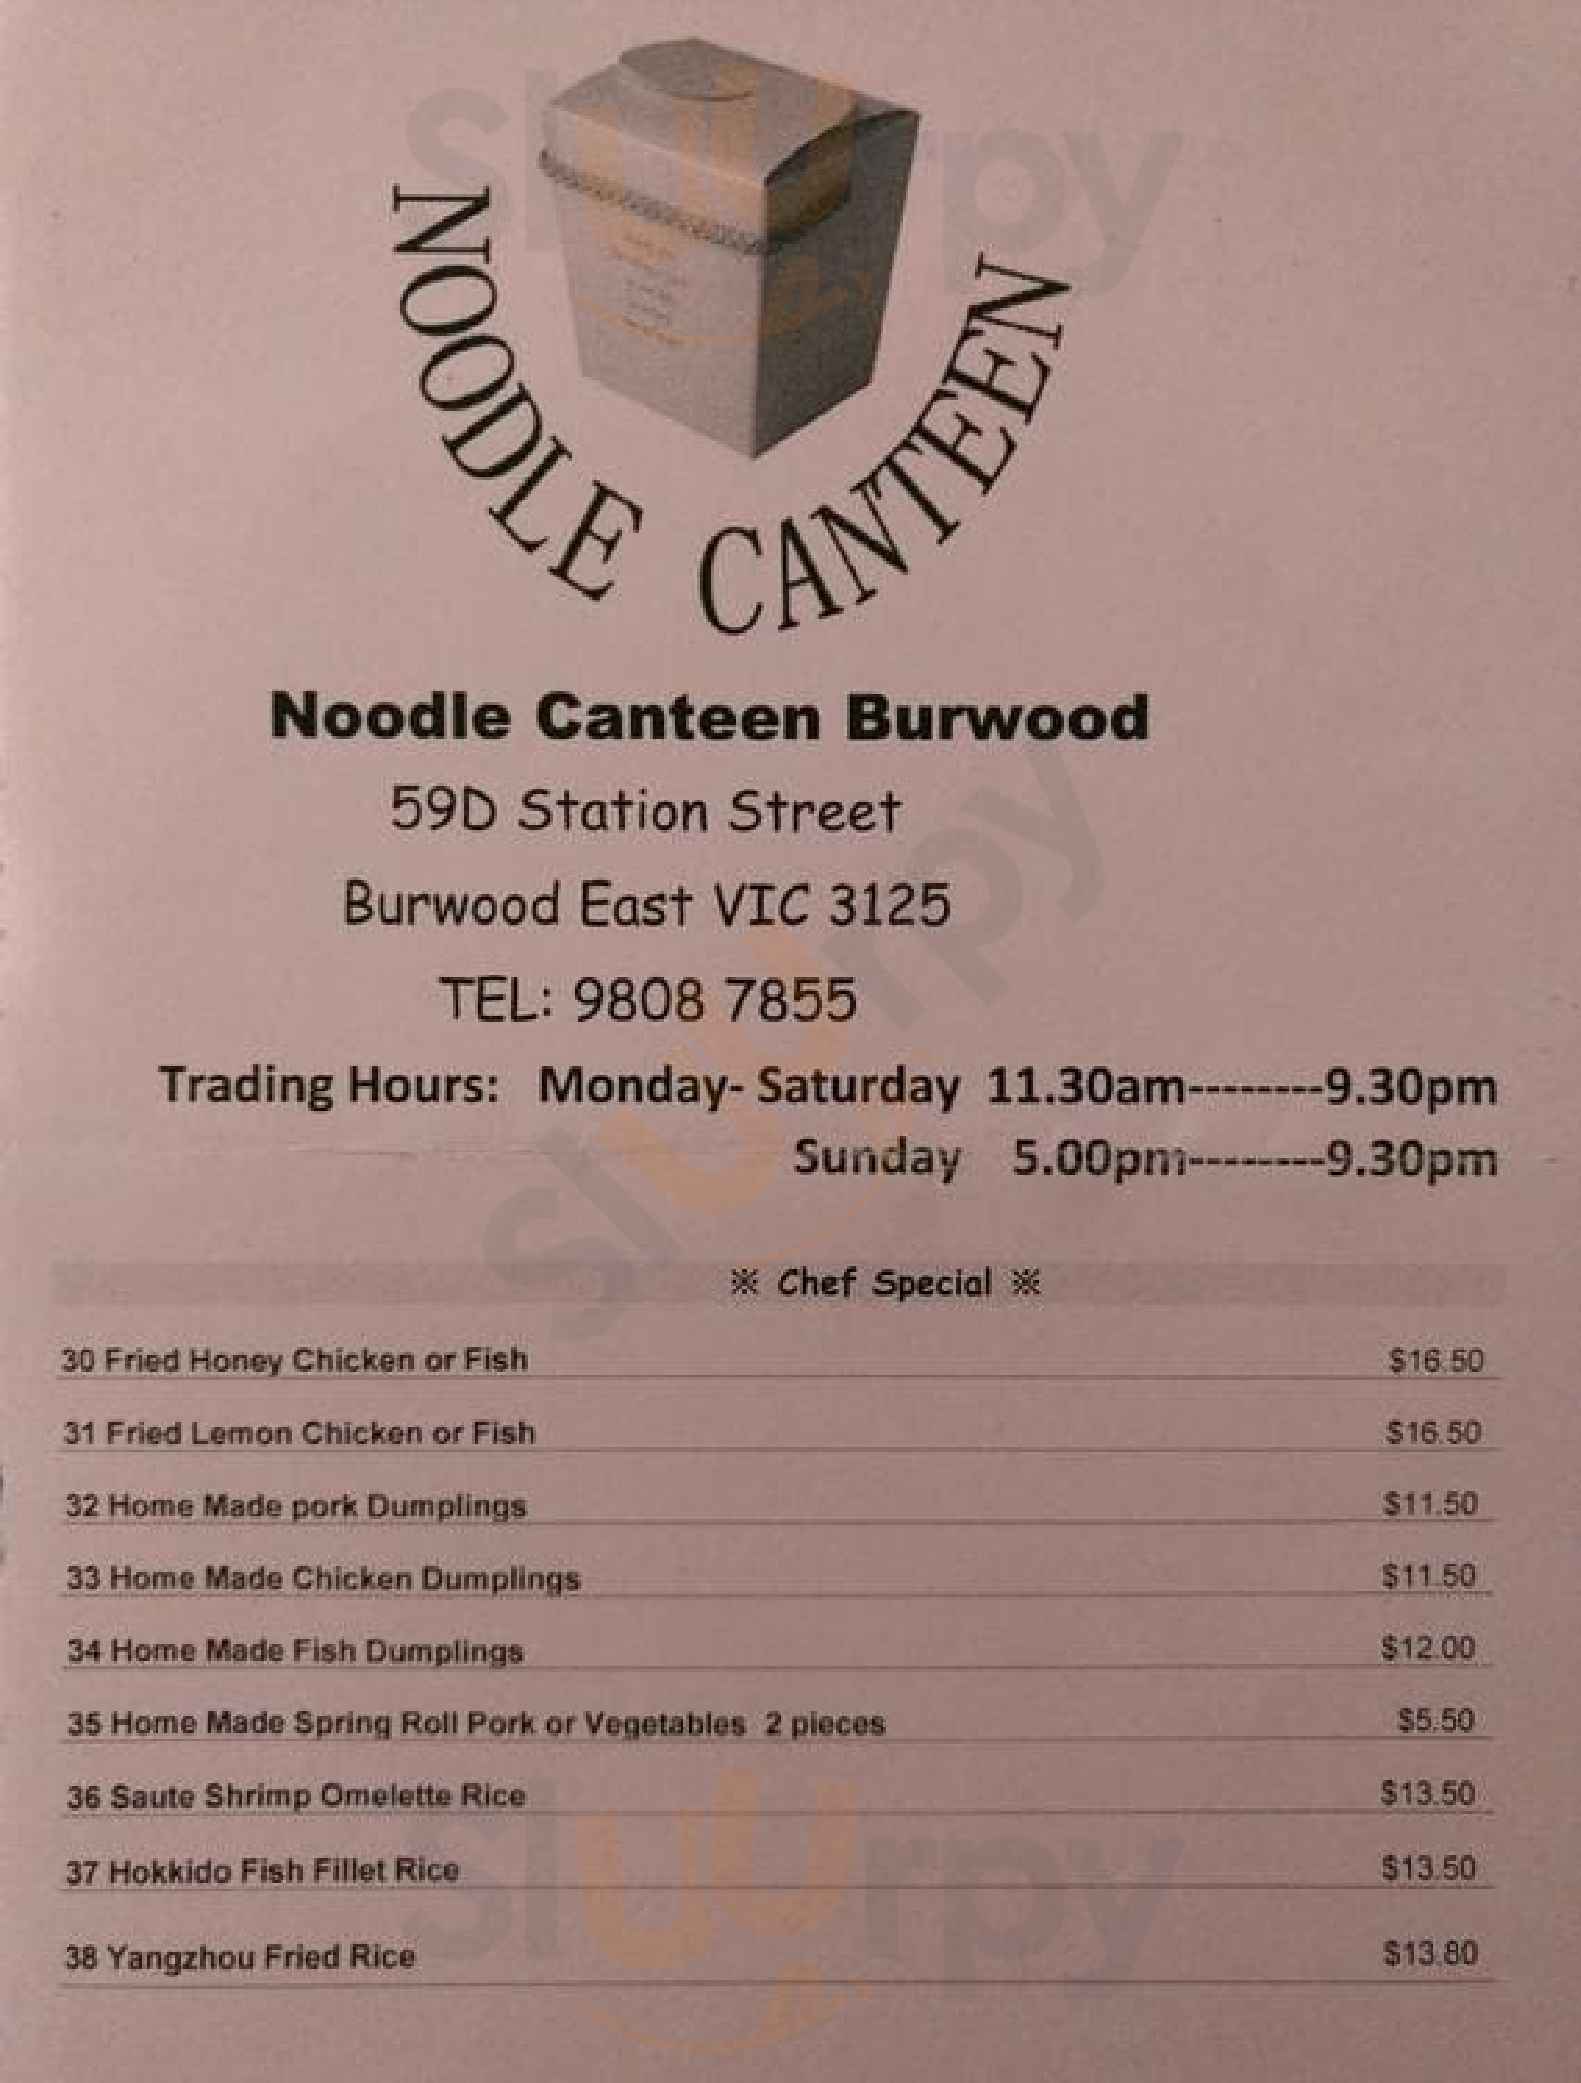 Noodle Canteen Burwood Menu - 1